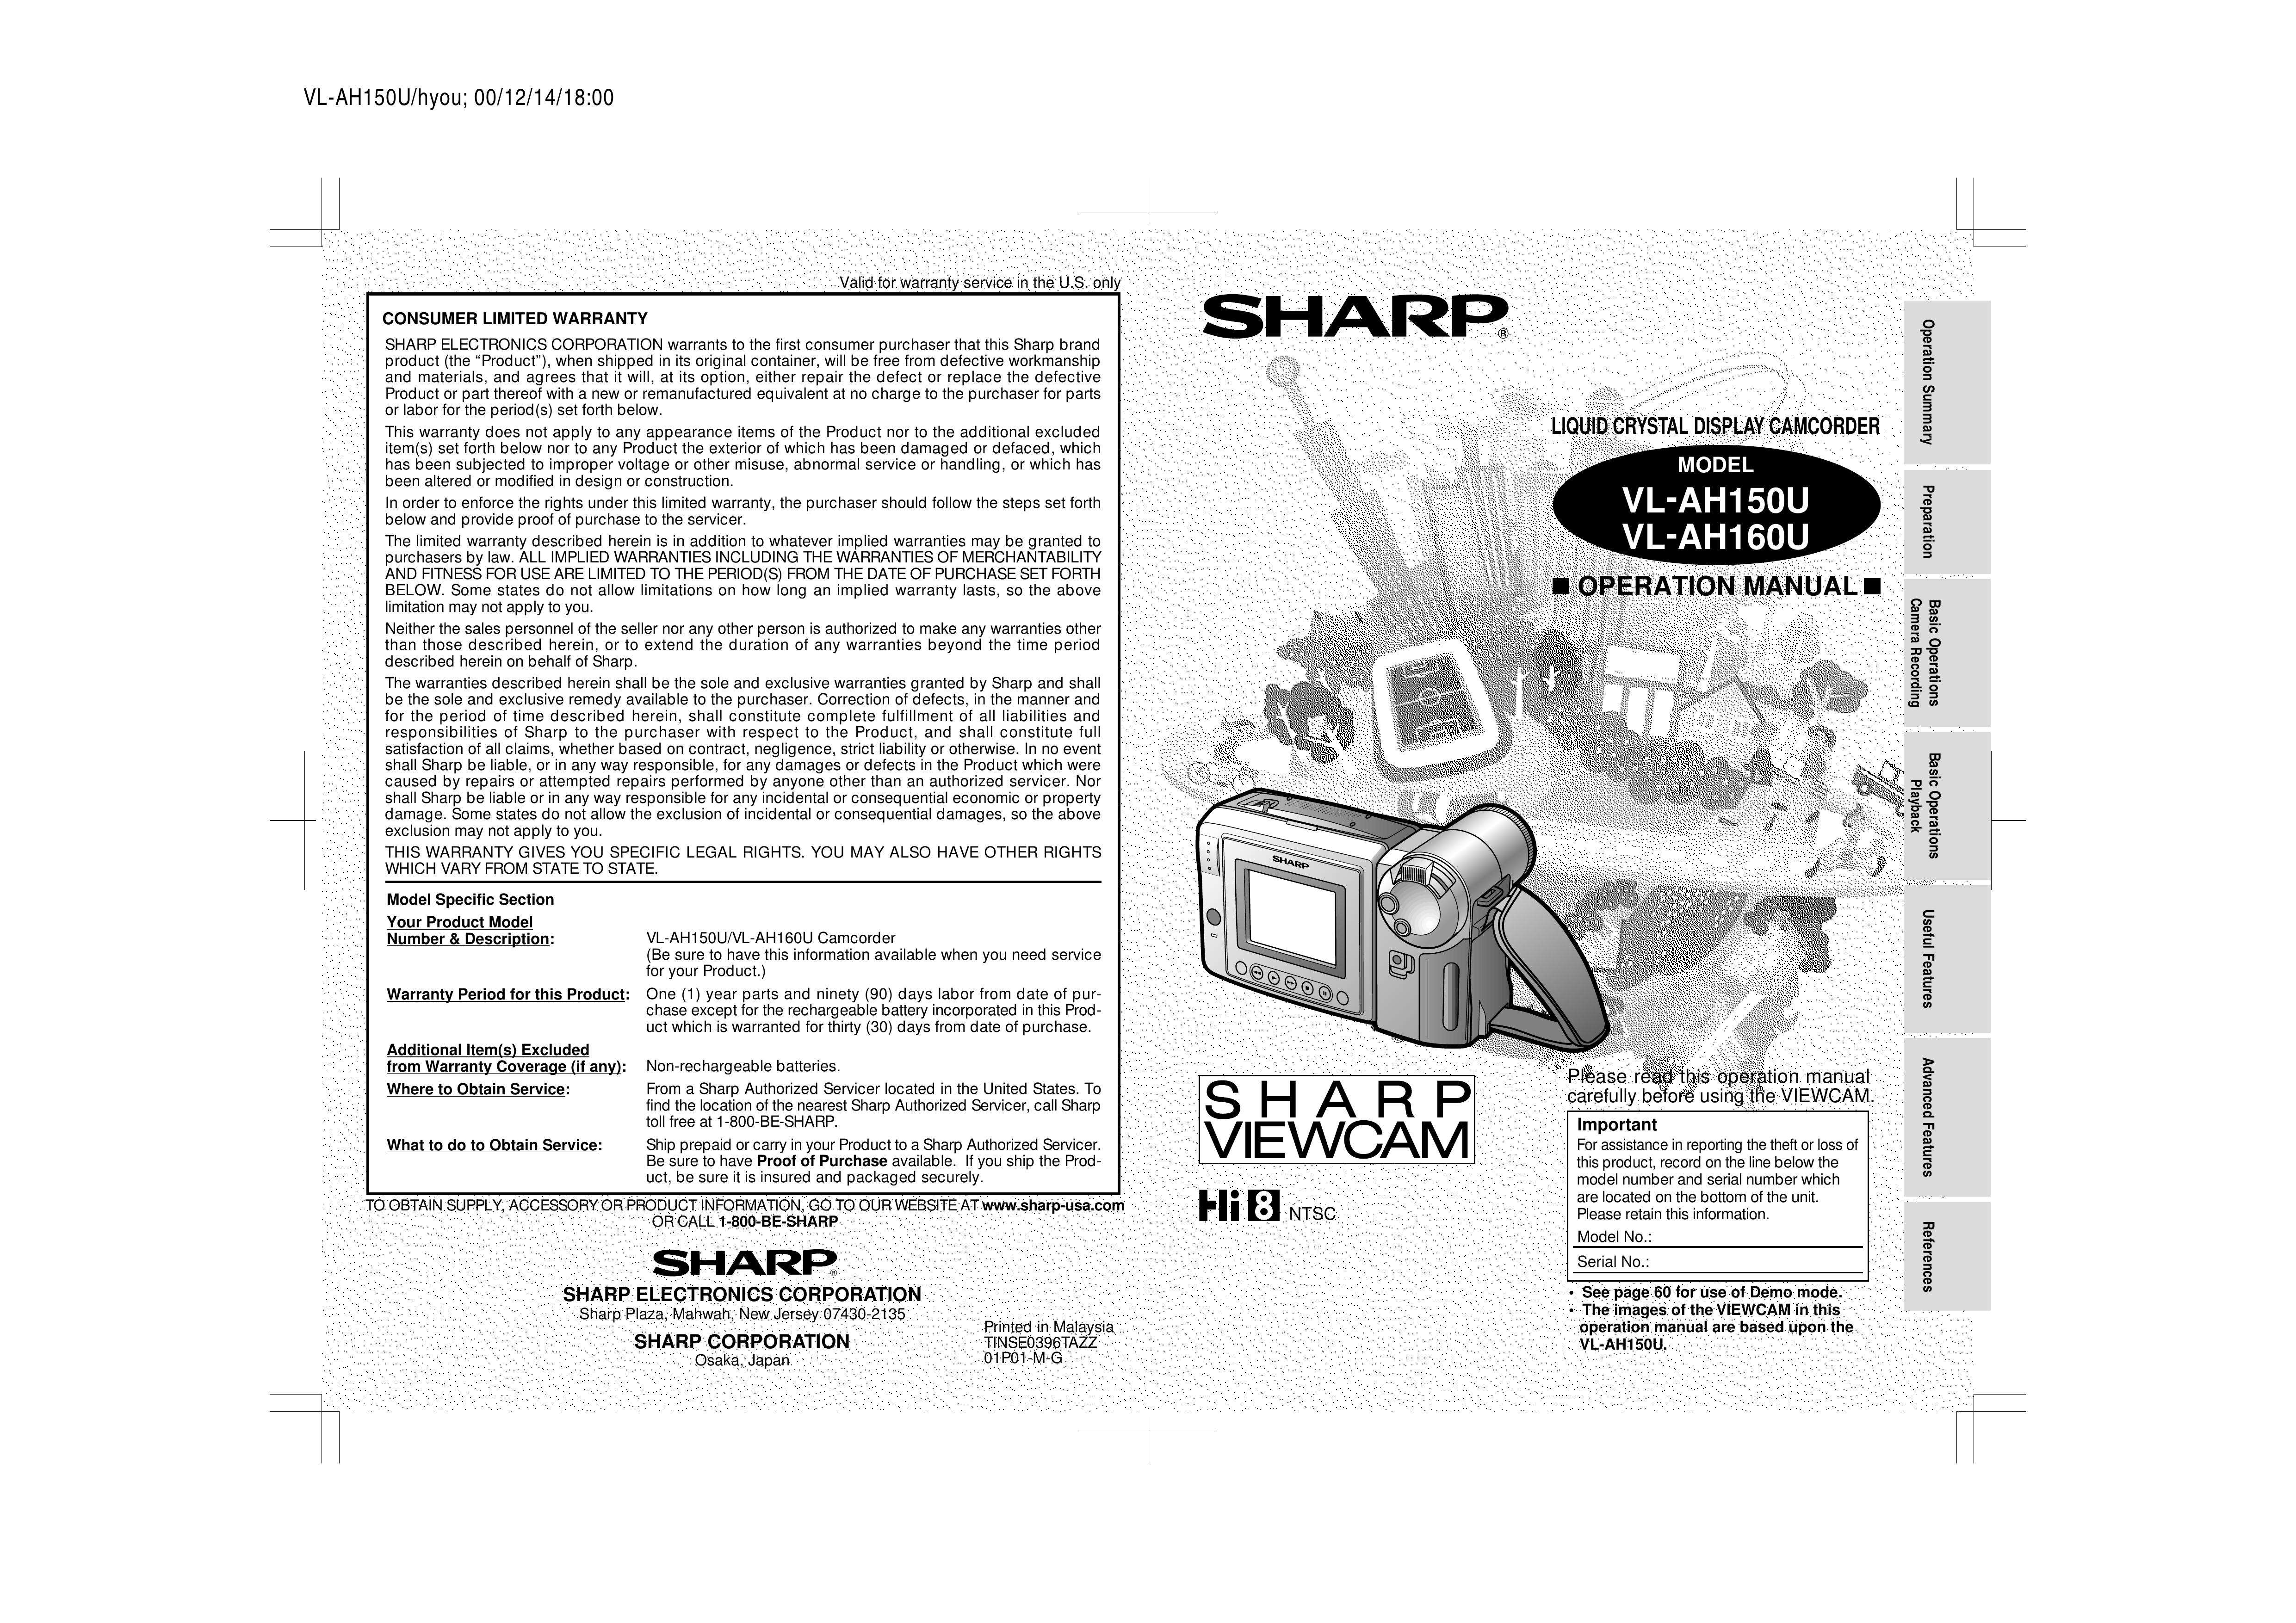 Sharp VL-AH160U Camcorder User Manual